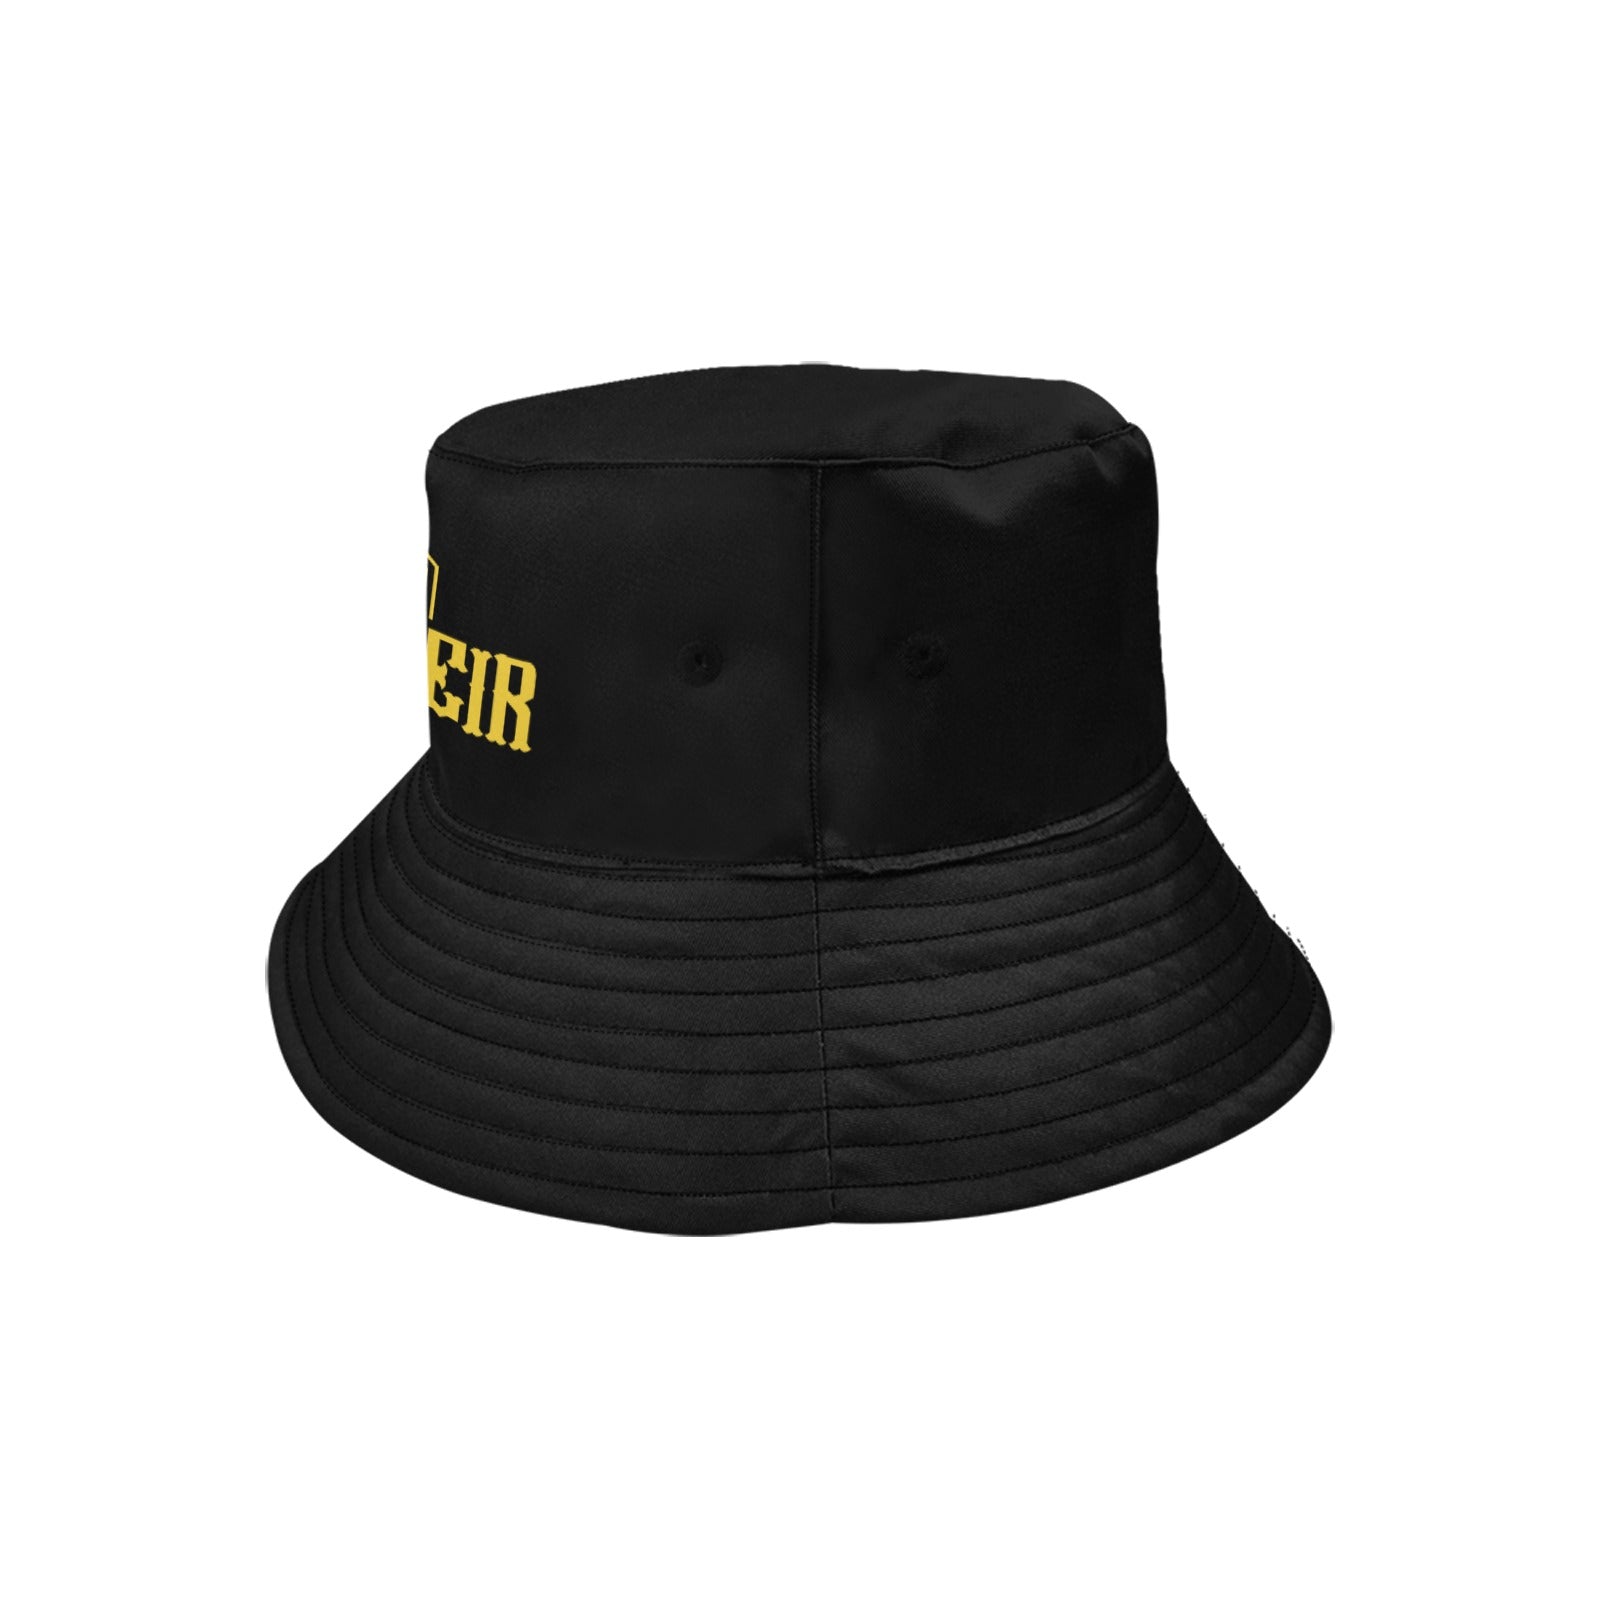 Kingdom Heir Bucket Hat